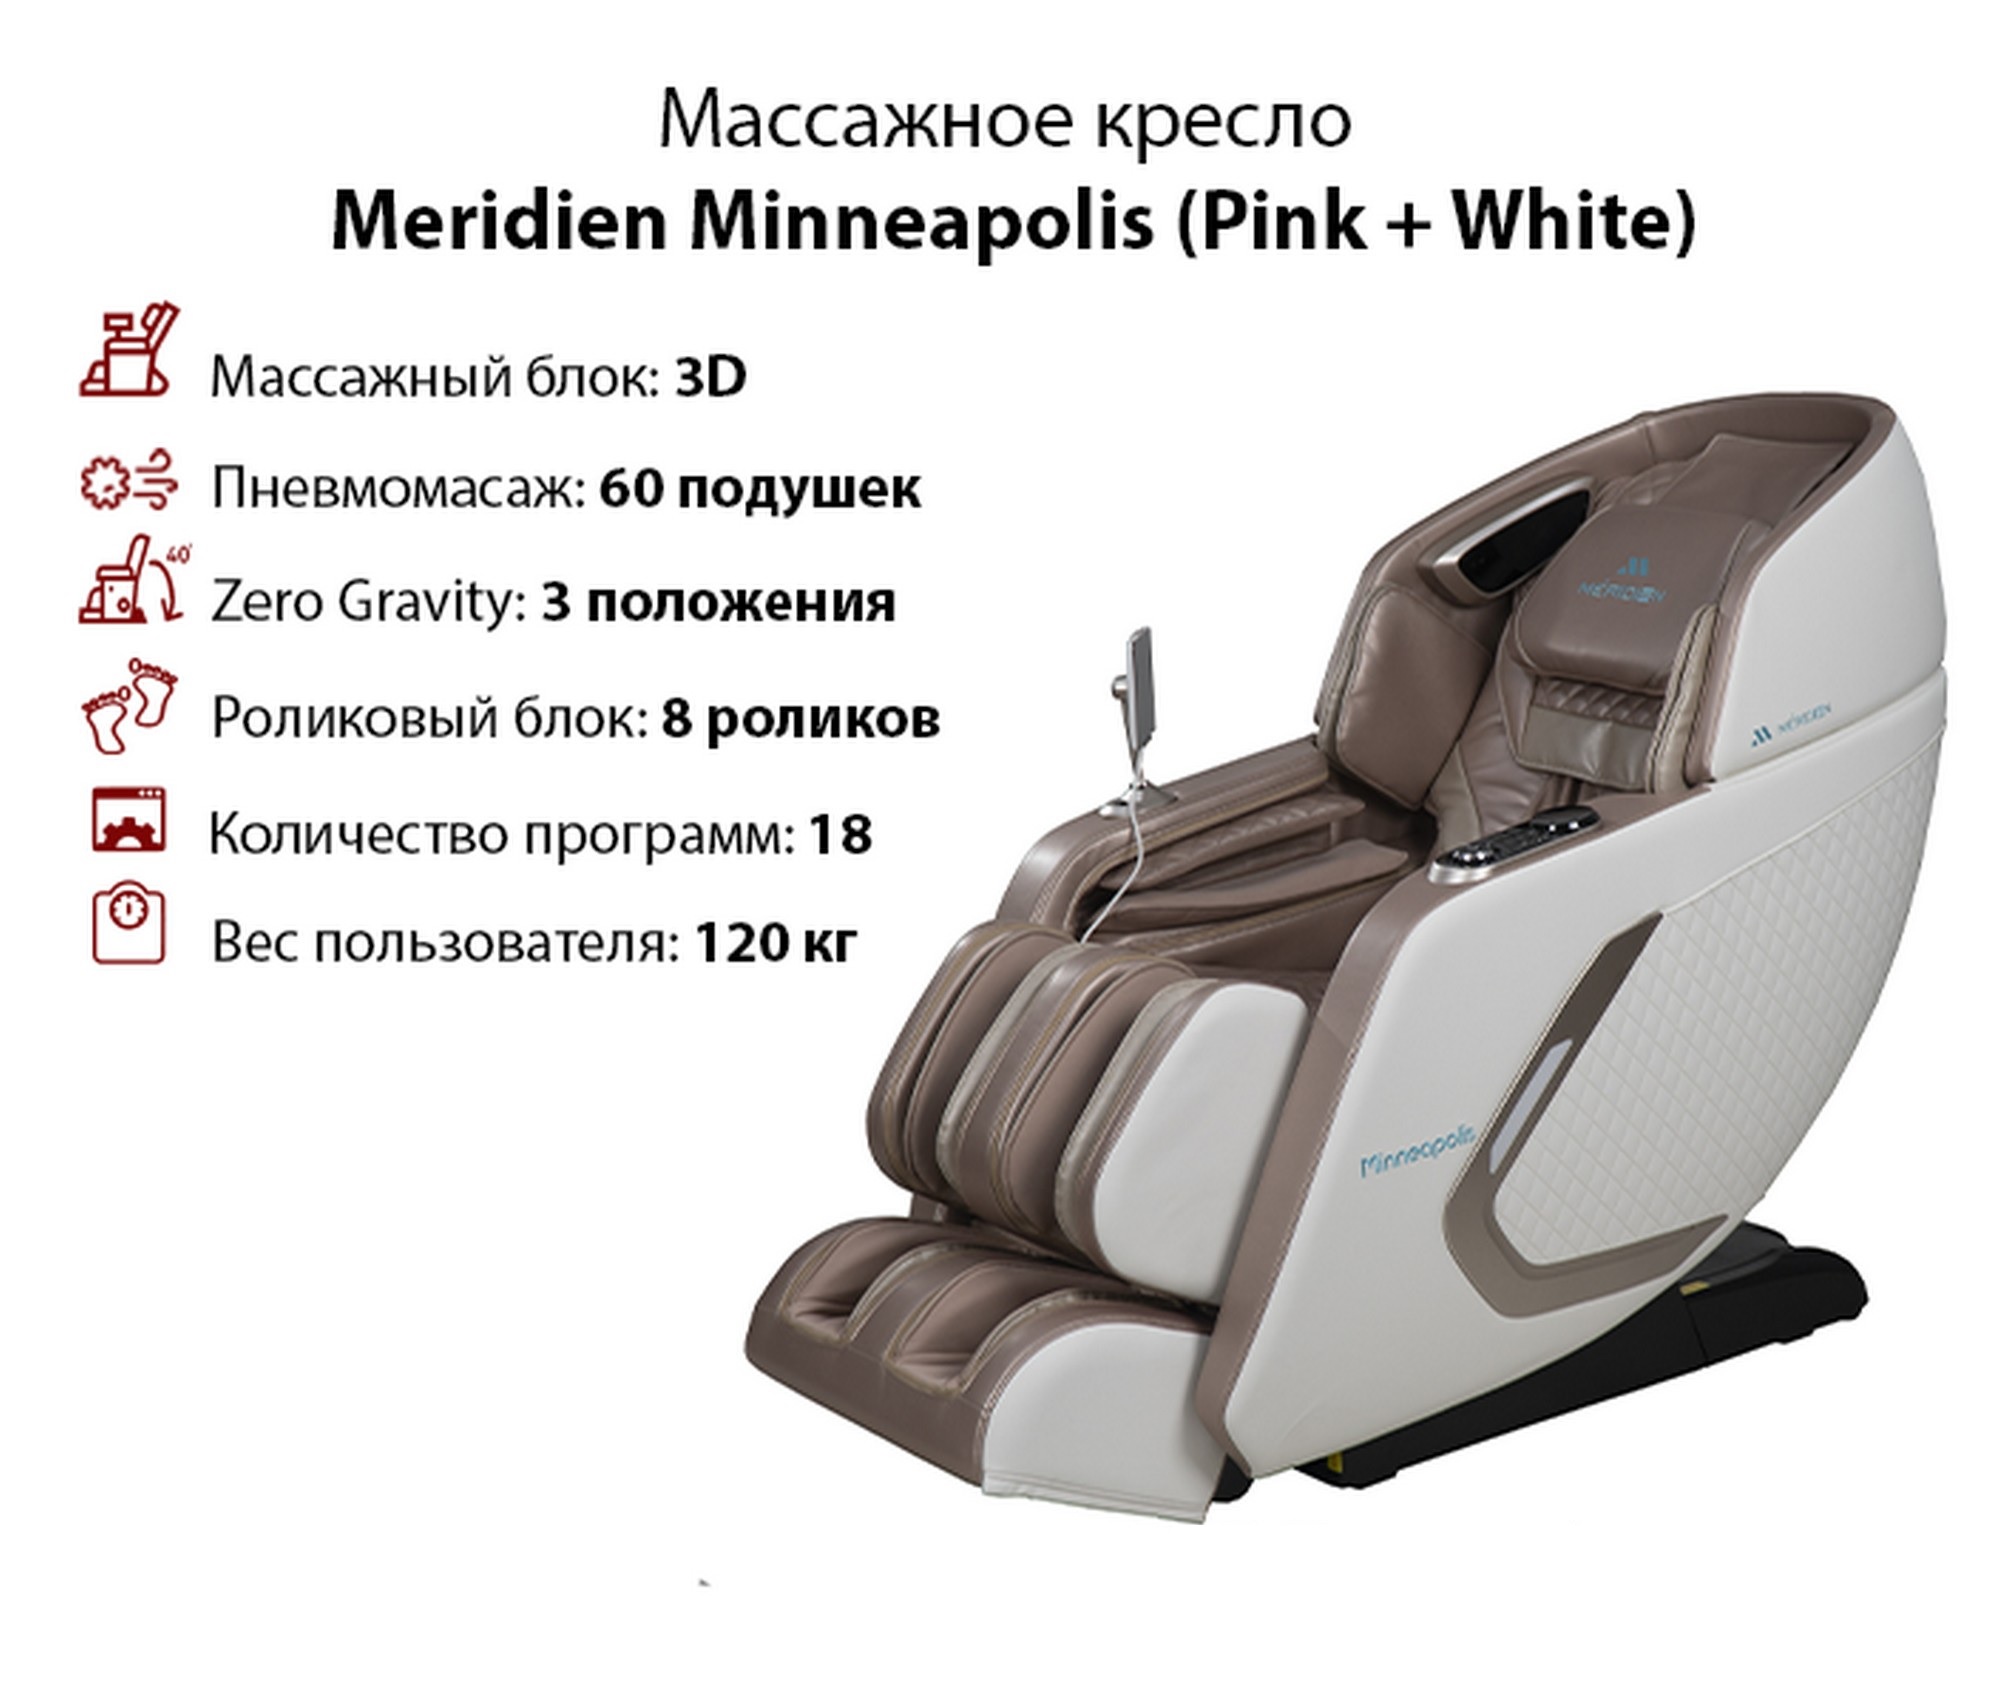 Массажное кресло Meridien Minneapolis Pink + White 2000_1702